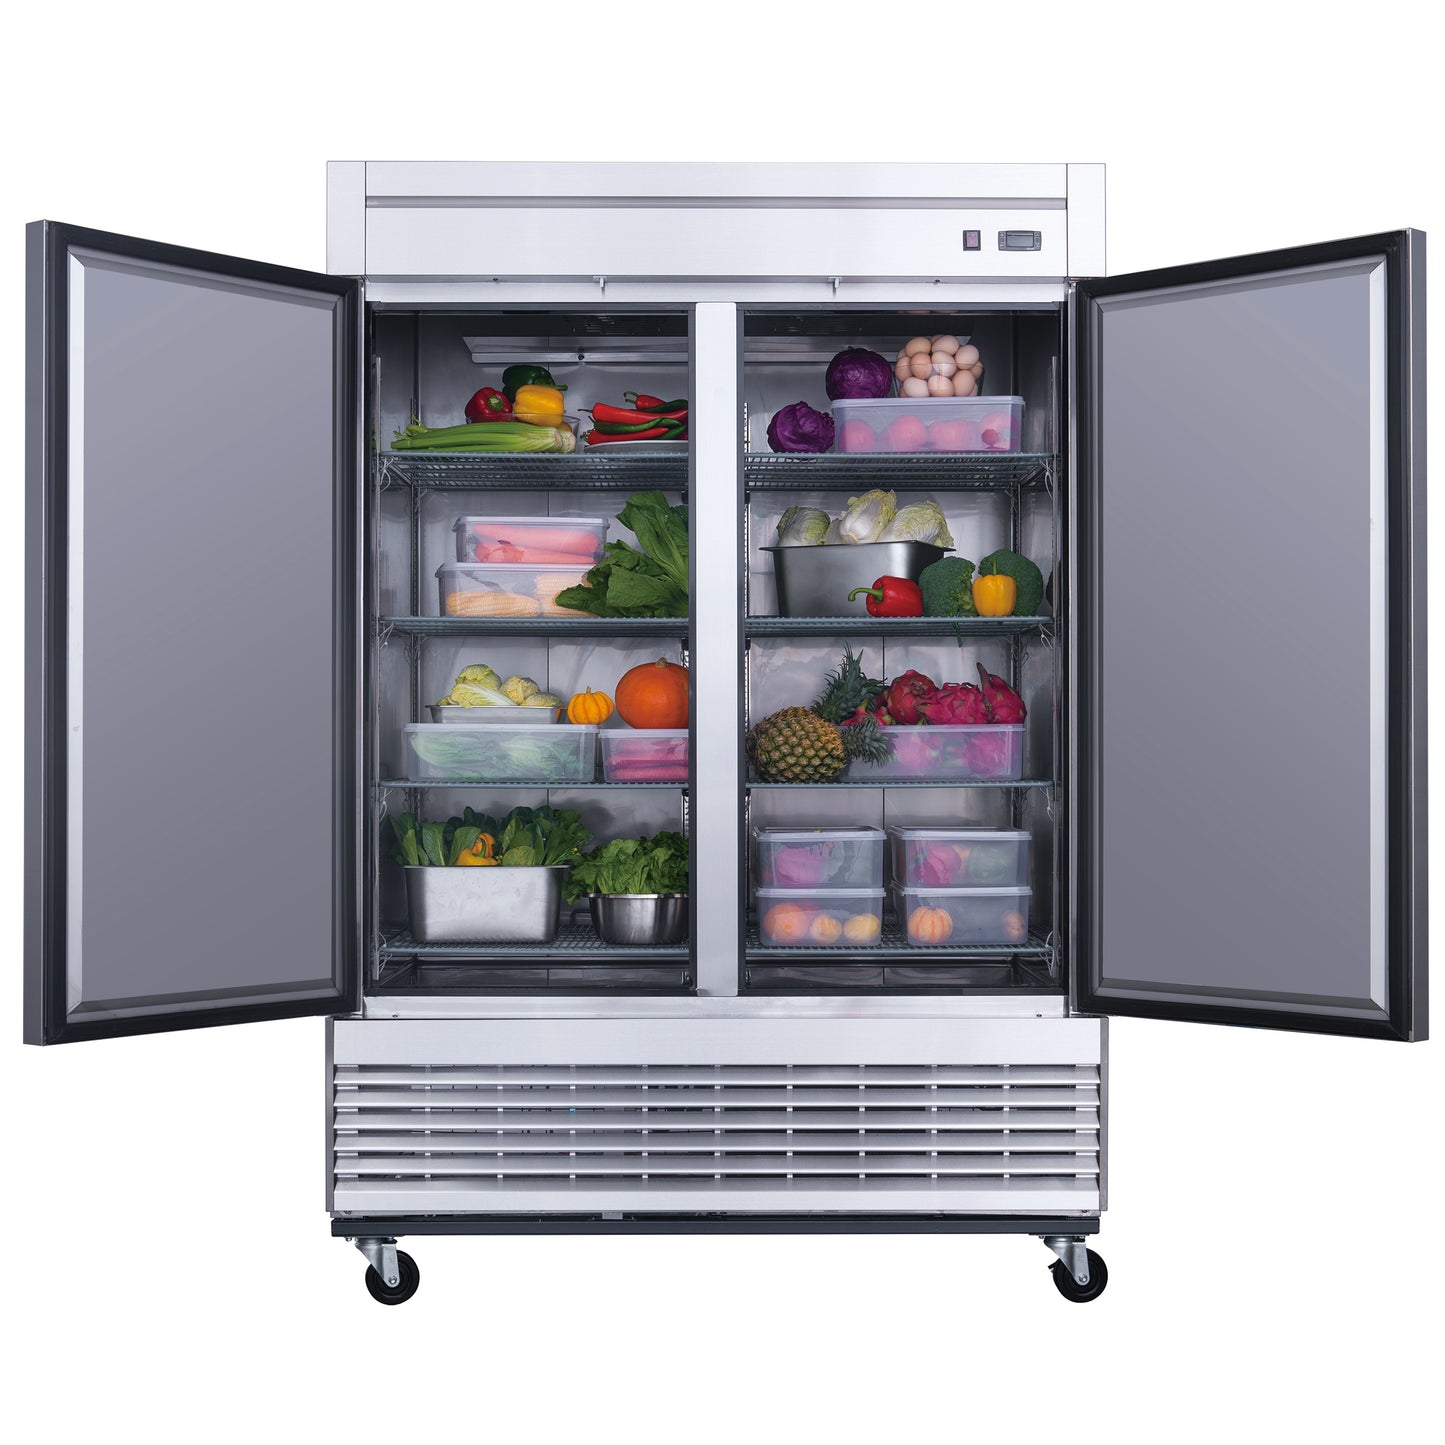 Dukers D55R 40.7 cu. ft. 2-Door Commercial Refrigerator